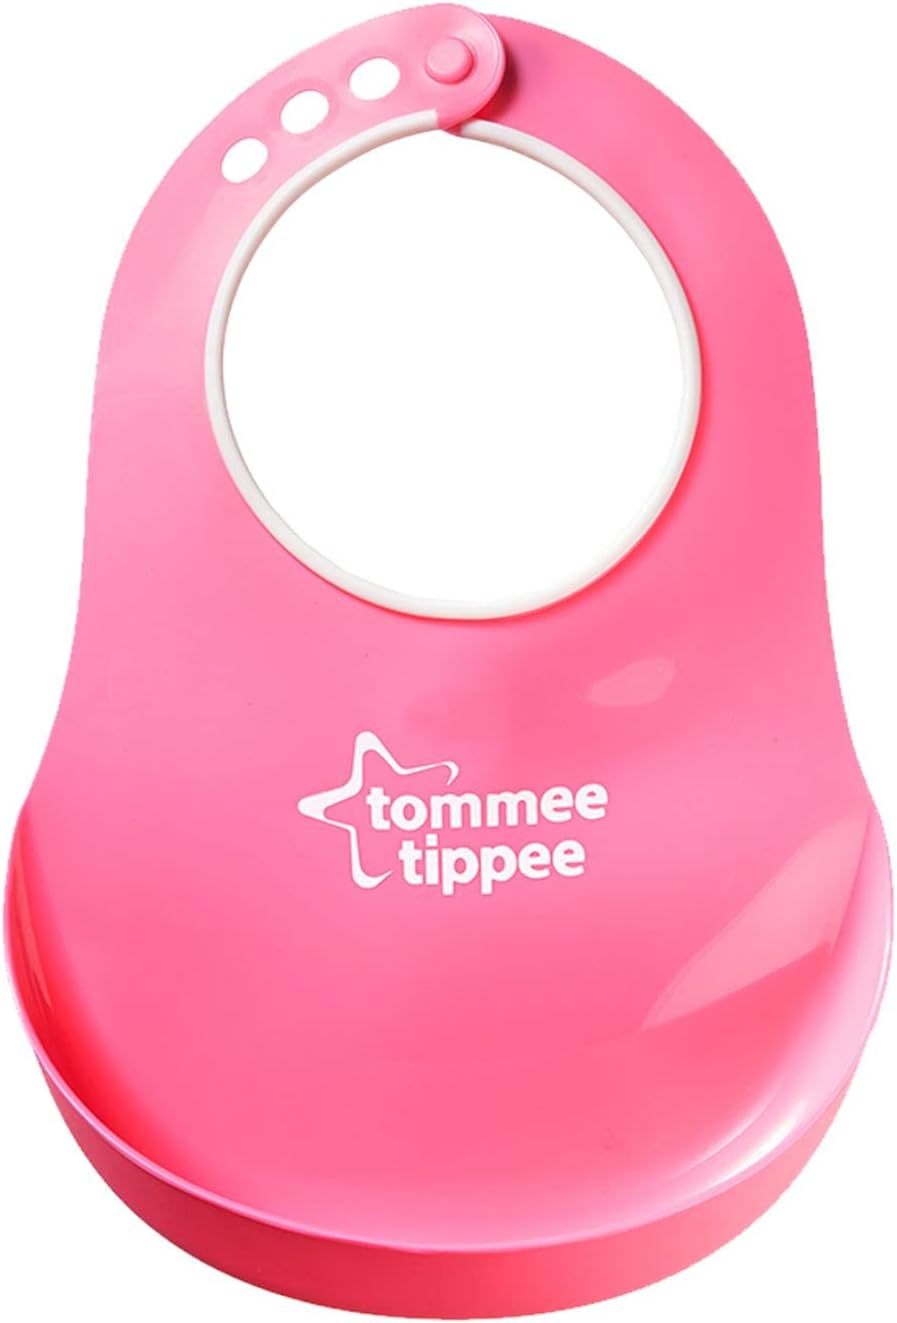 Tommee Tippee Comfi Neck Bib 6 Months+